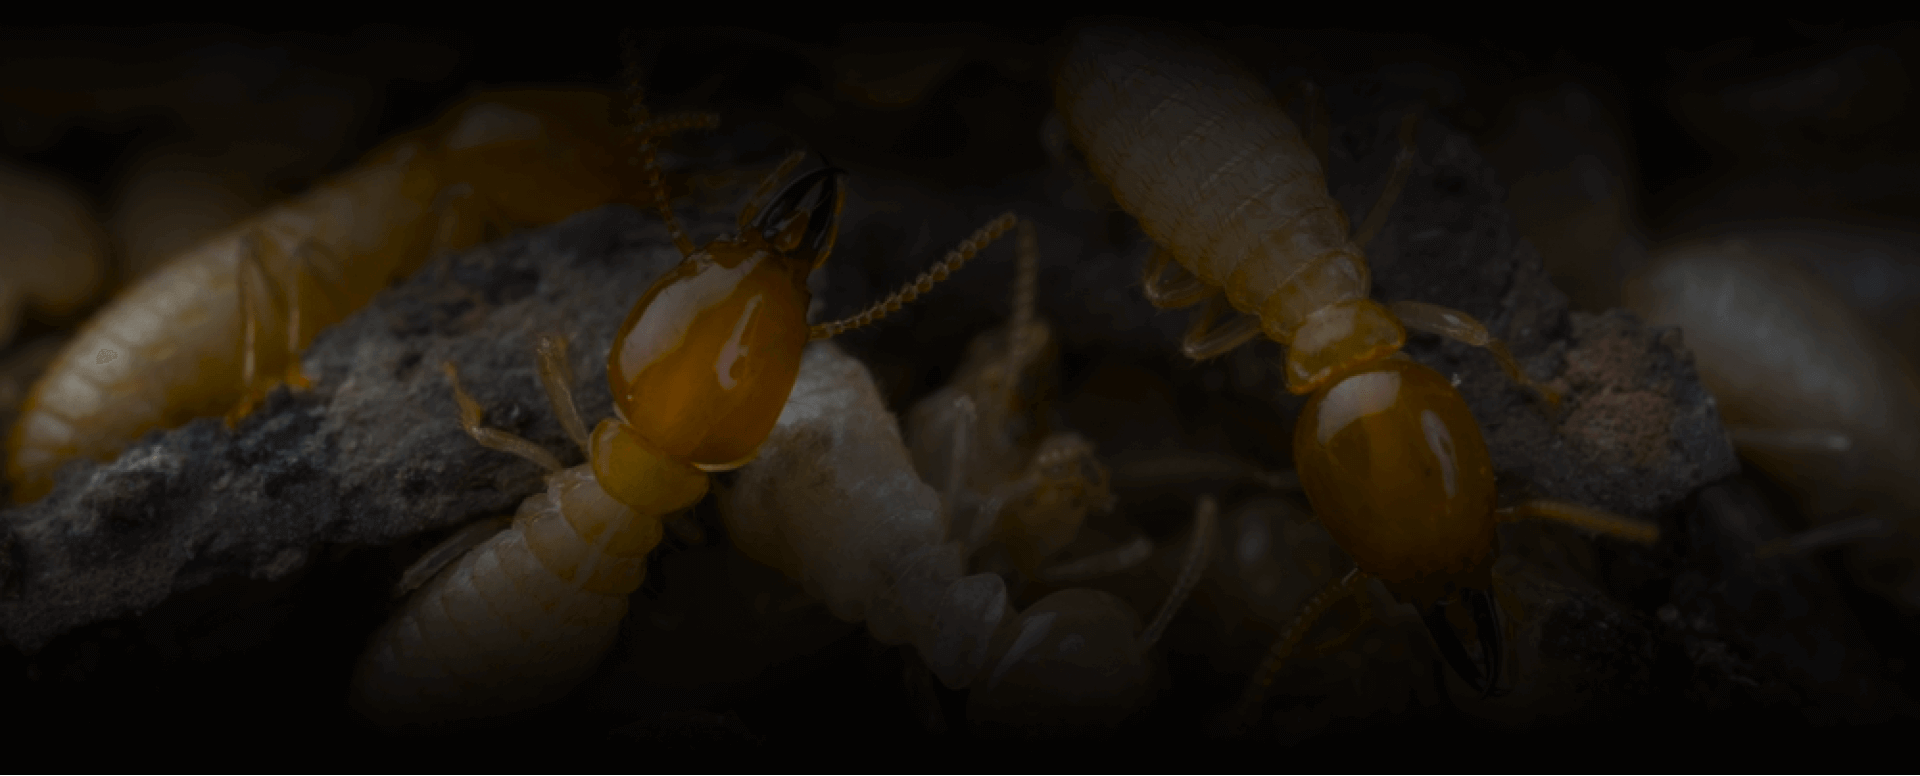 Termite exterminators - A picture of a big termite